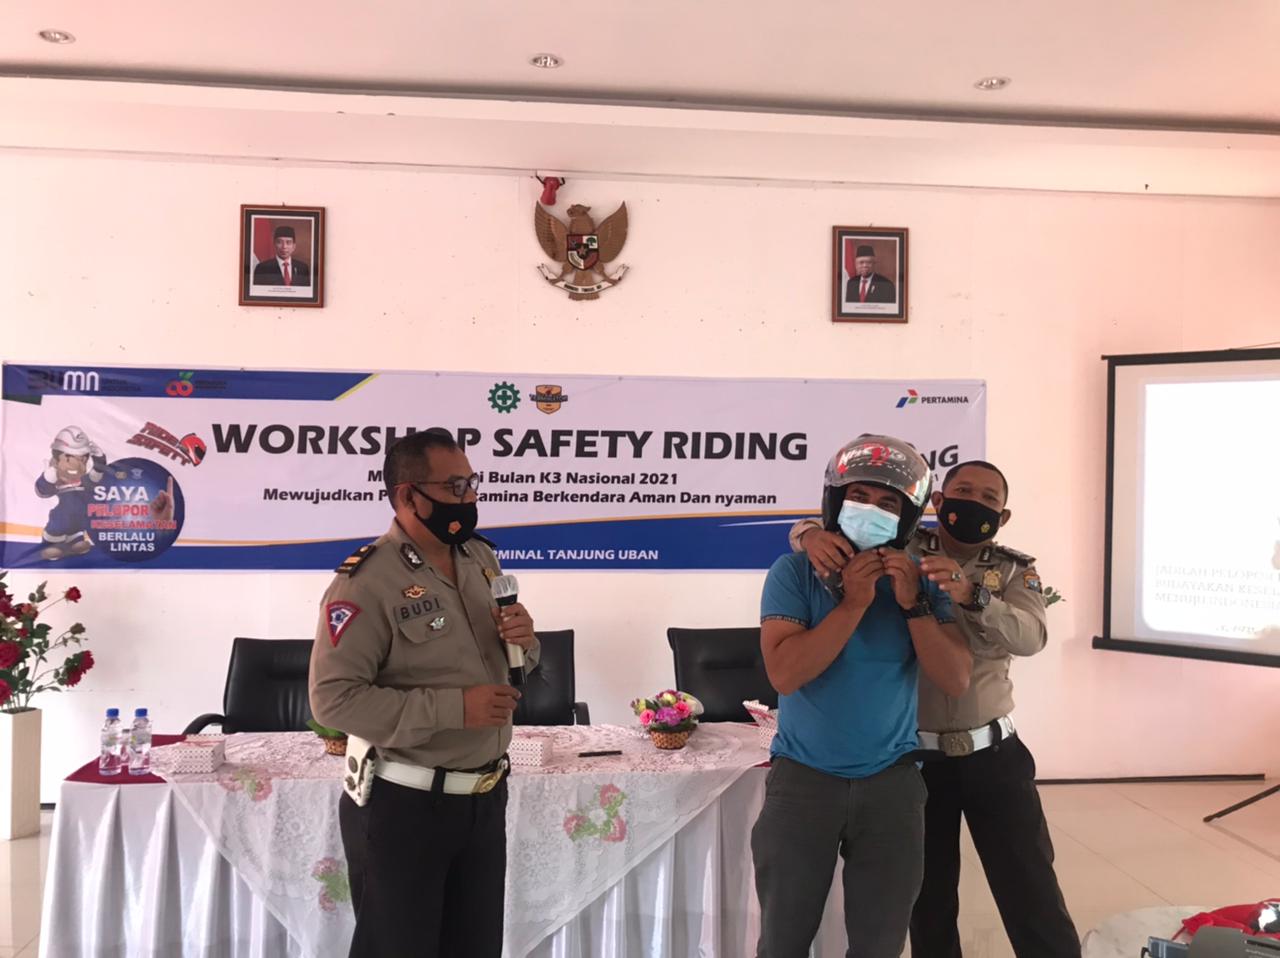 Memperingati Bulan K3 Nasional 2021, Satlantas Polres Bintan Sosialisasikan Keselamatan Lalu Lintas dan Workhsop Safety Riding